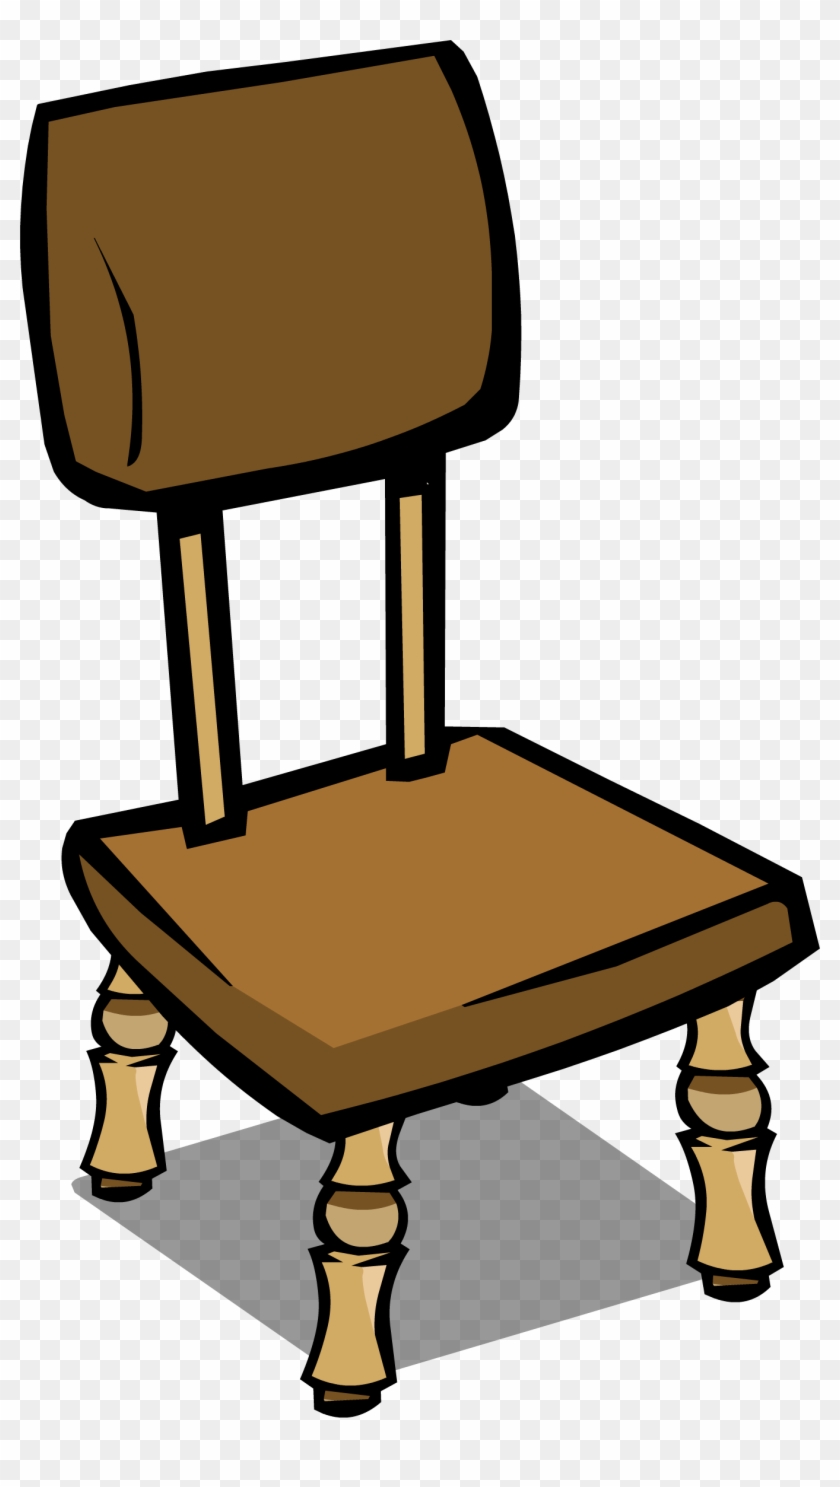 Dinner Chair Sprite 008 - Chair #1112375